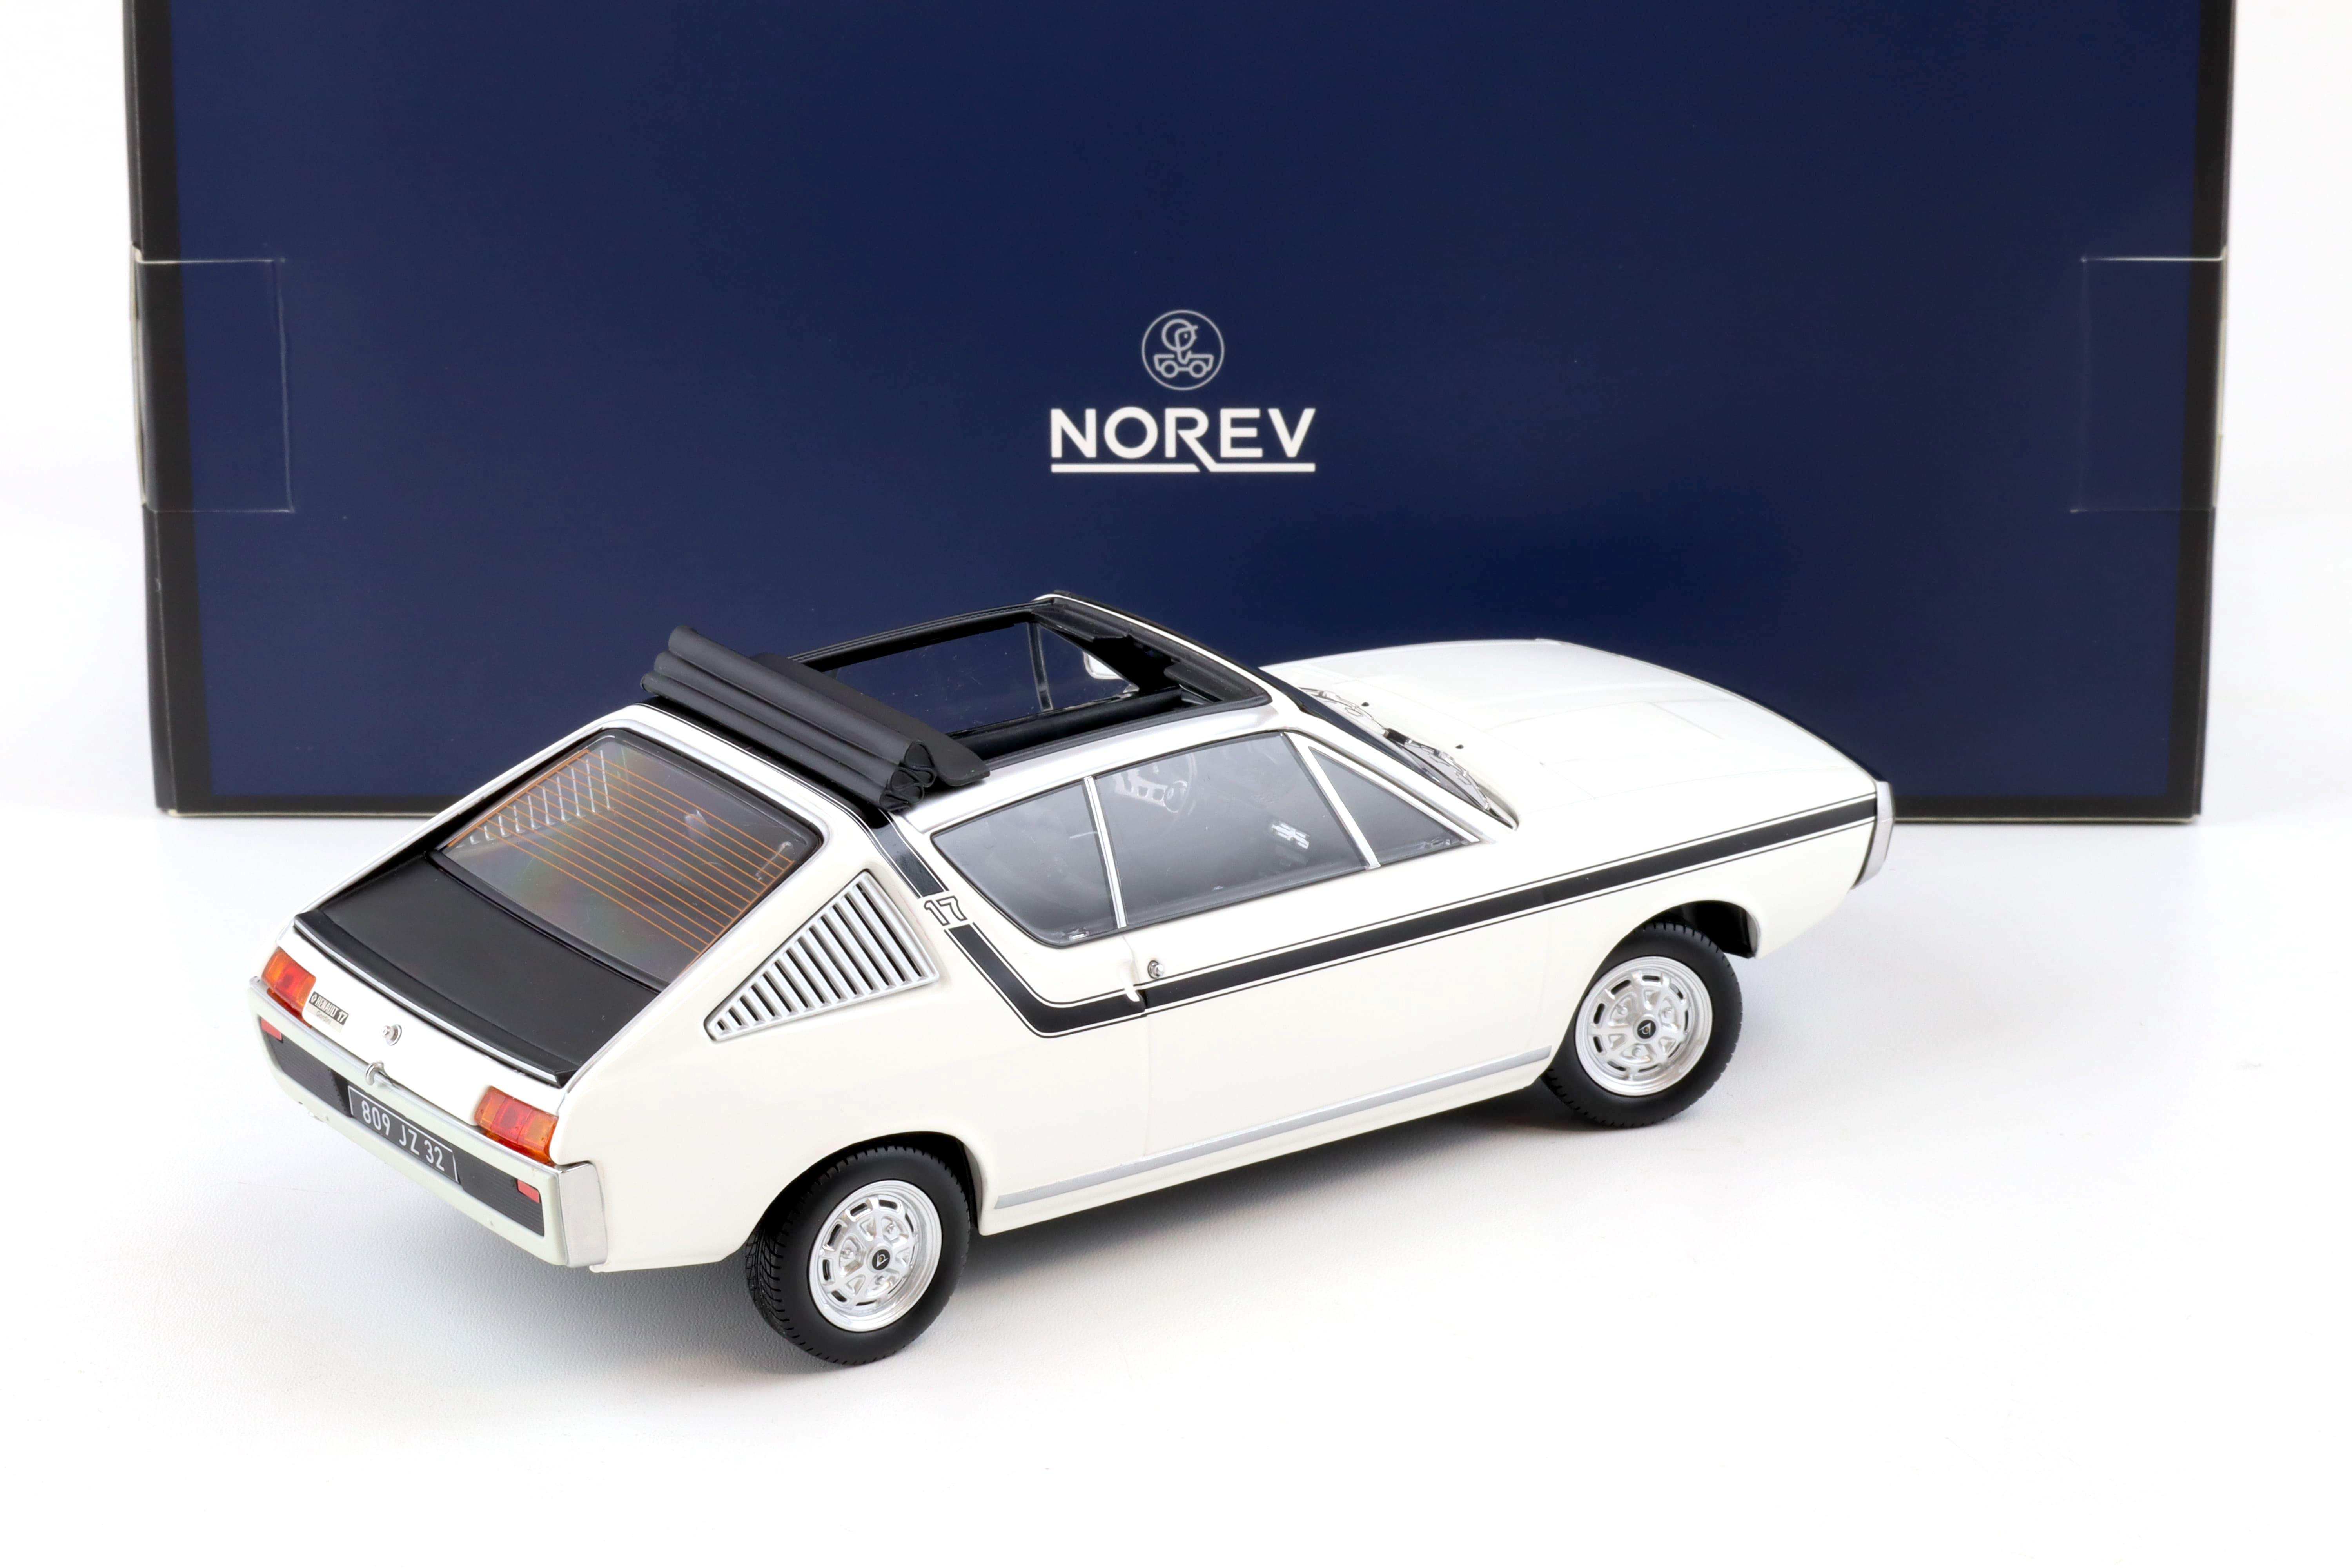 1:18 Norev Renault 17 Gordini Recouvrable 1975 white & black deco - Limited 300 pcs.